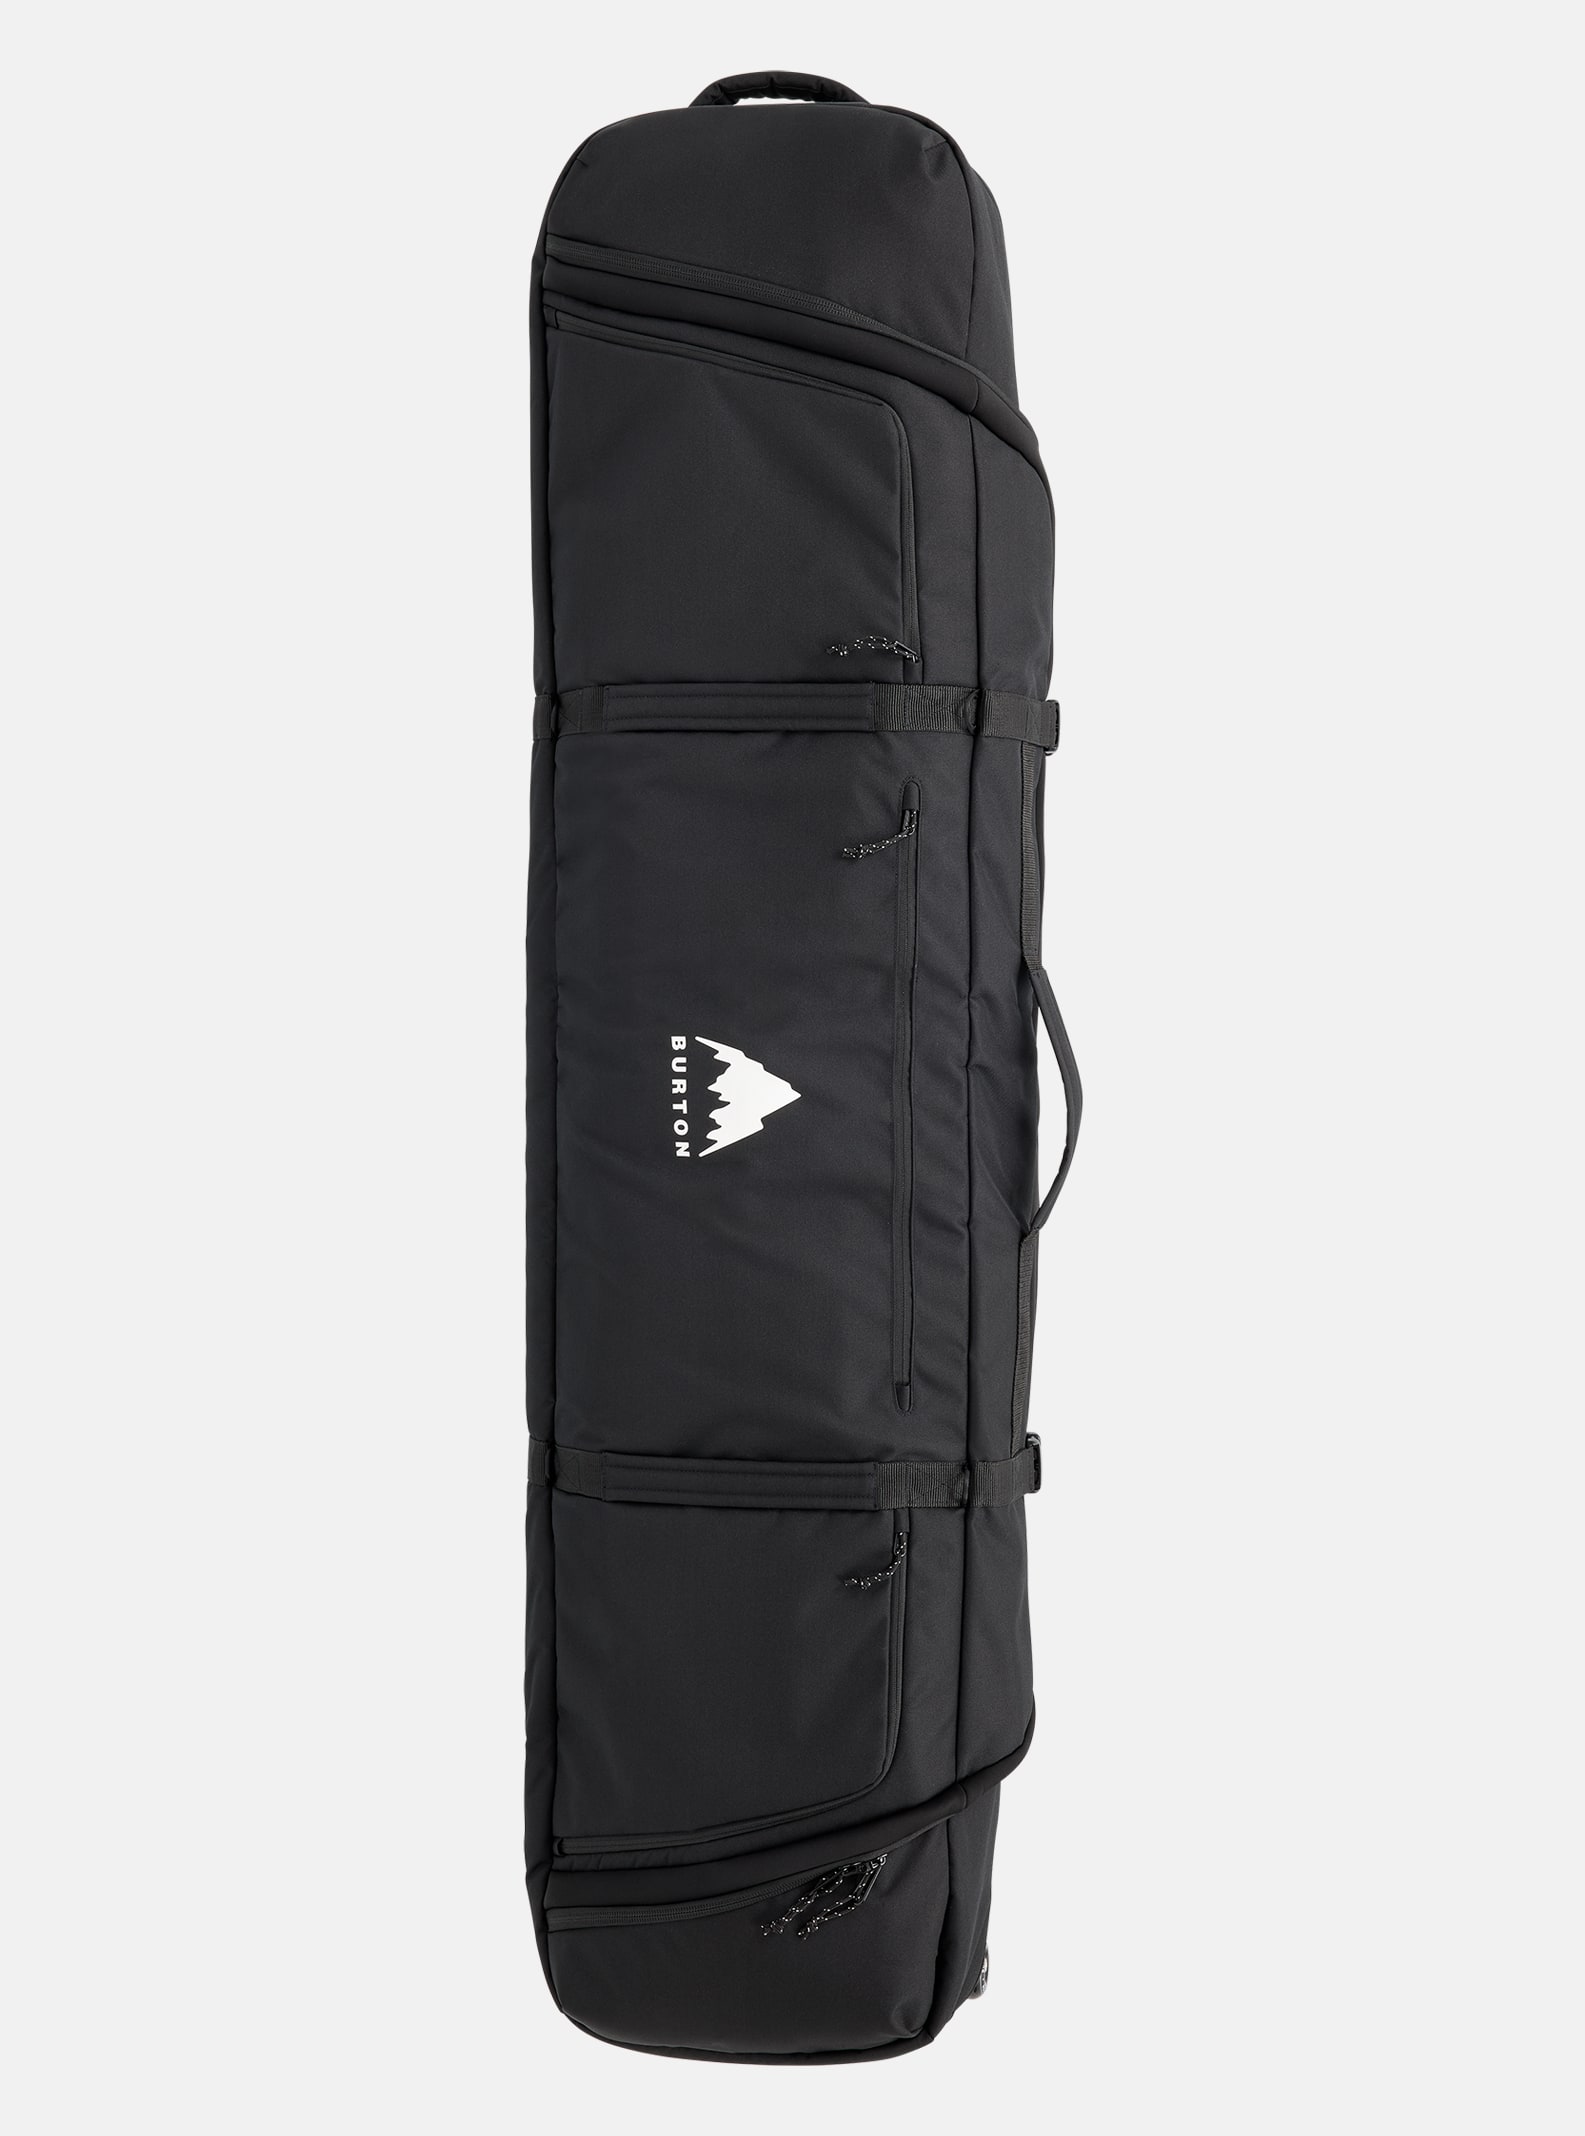 Checked Luggage | Burton Snowboards US